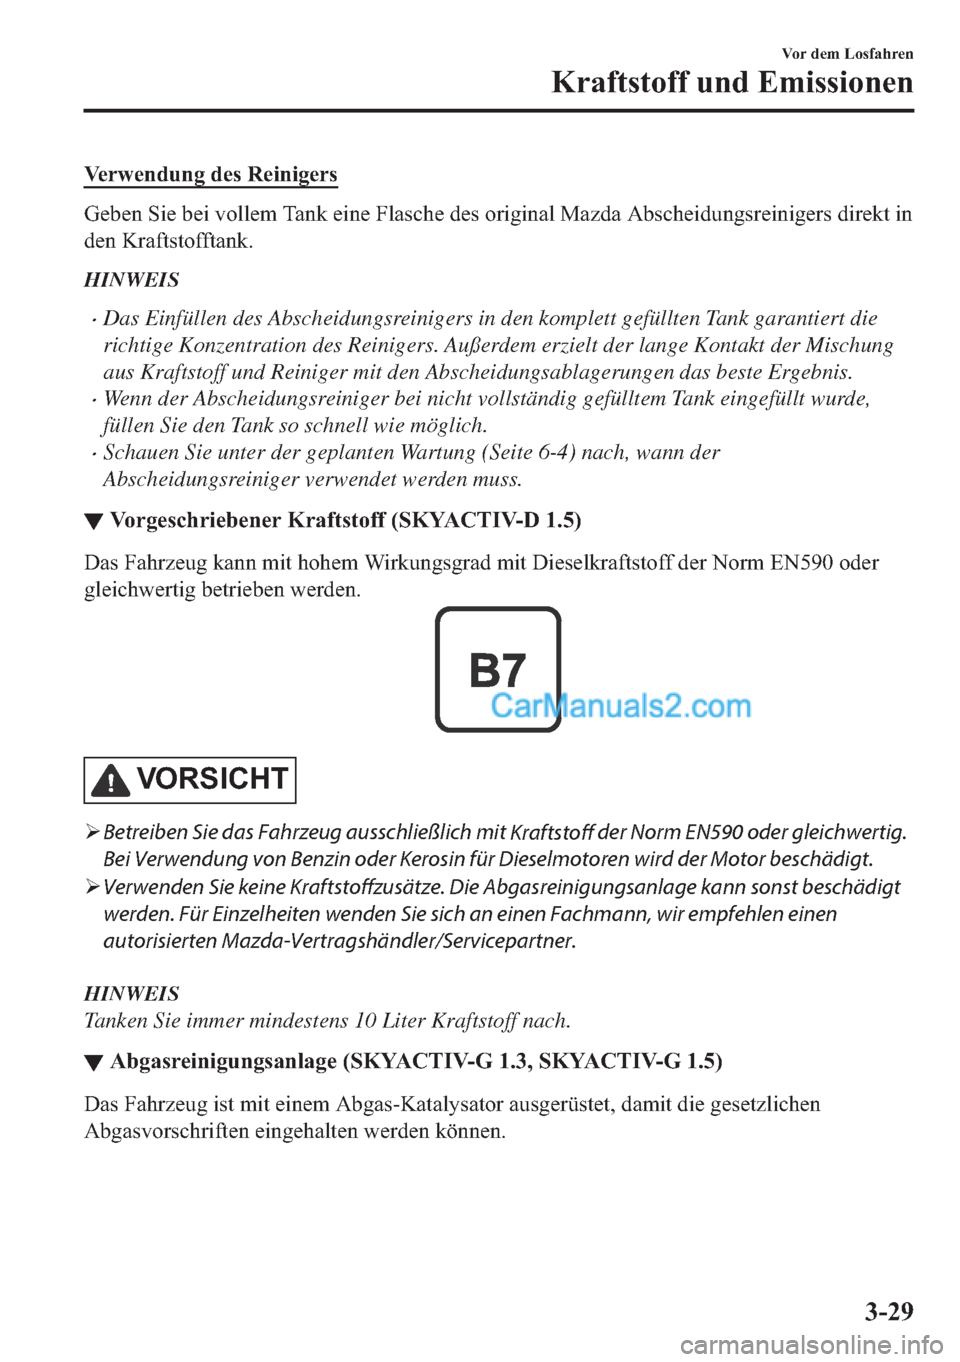 MAZDA MODEL 2 2018  Betriebsanleitung (in German) �9�H�U�Z�H�Q�G�X�Q�J��G�H�V��5�H�L�Q�L�J�H�U�V
�*�H�E�H�Q��6�L�H��E�H�L��Y�R�O�O�H�P��7�D�Q�N��H�L�Q�H��)�O�D�V�F�K�H��G�H�V��R�U�L�J�L�Q�D�O��0�D�]�G�D��$�E�V�F�K�H�L�G�X�Q�J�V�U�H�L�Q�L�